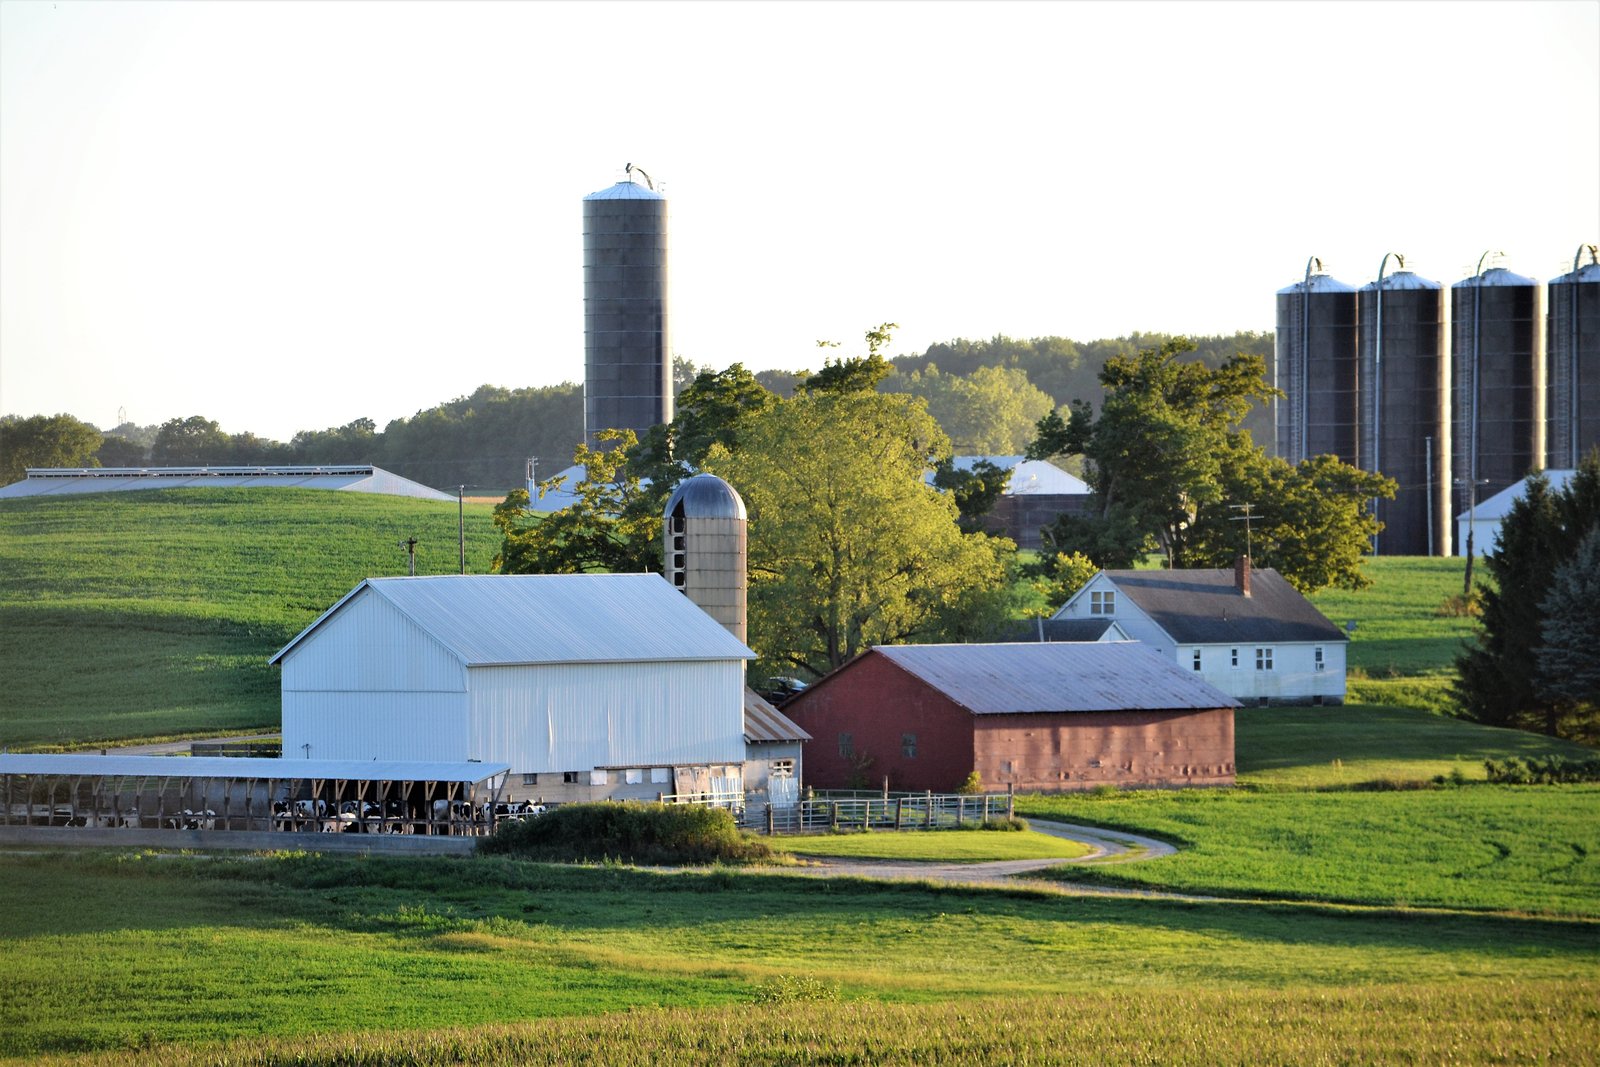 Countryside a rural area of farmland in Michigan!